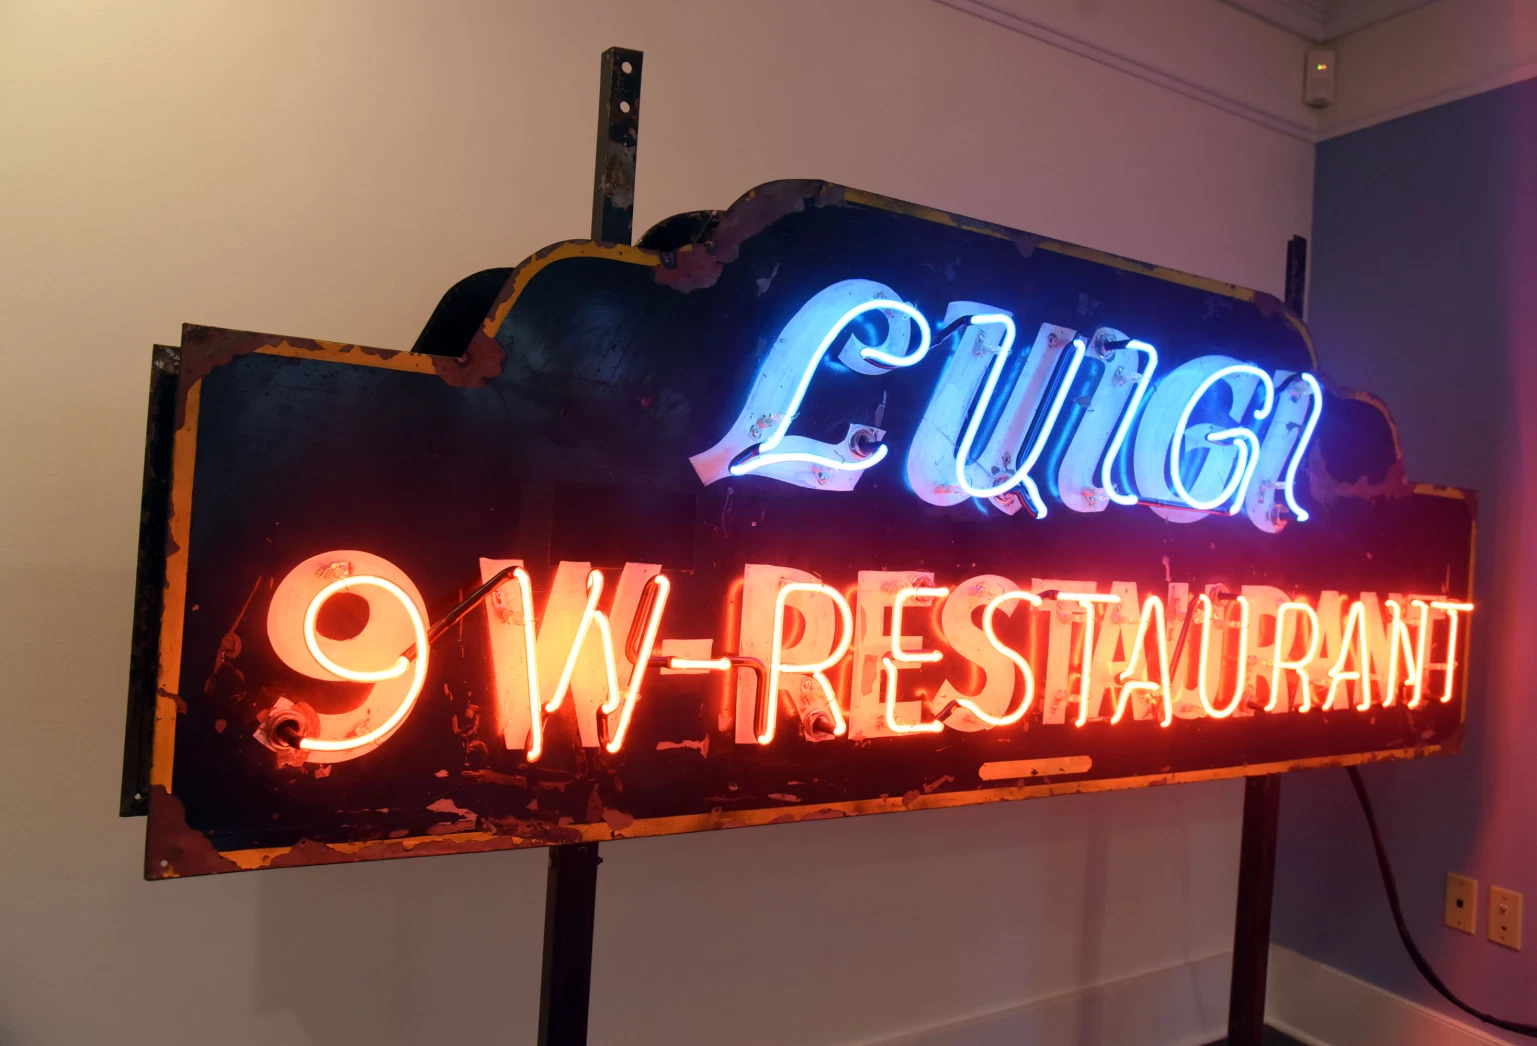 Luigi’s 9 W-Restaurant Neon Sign